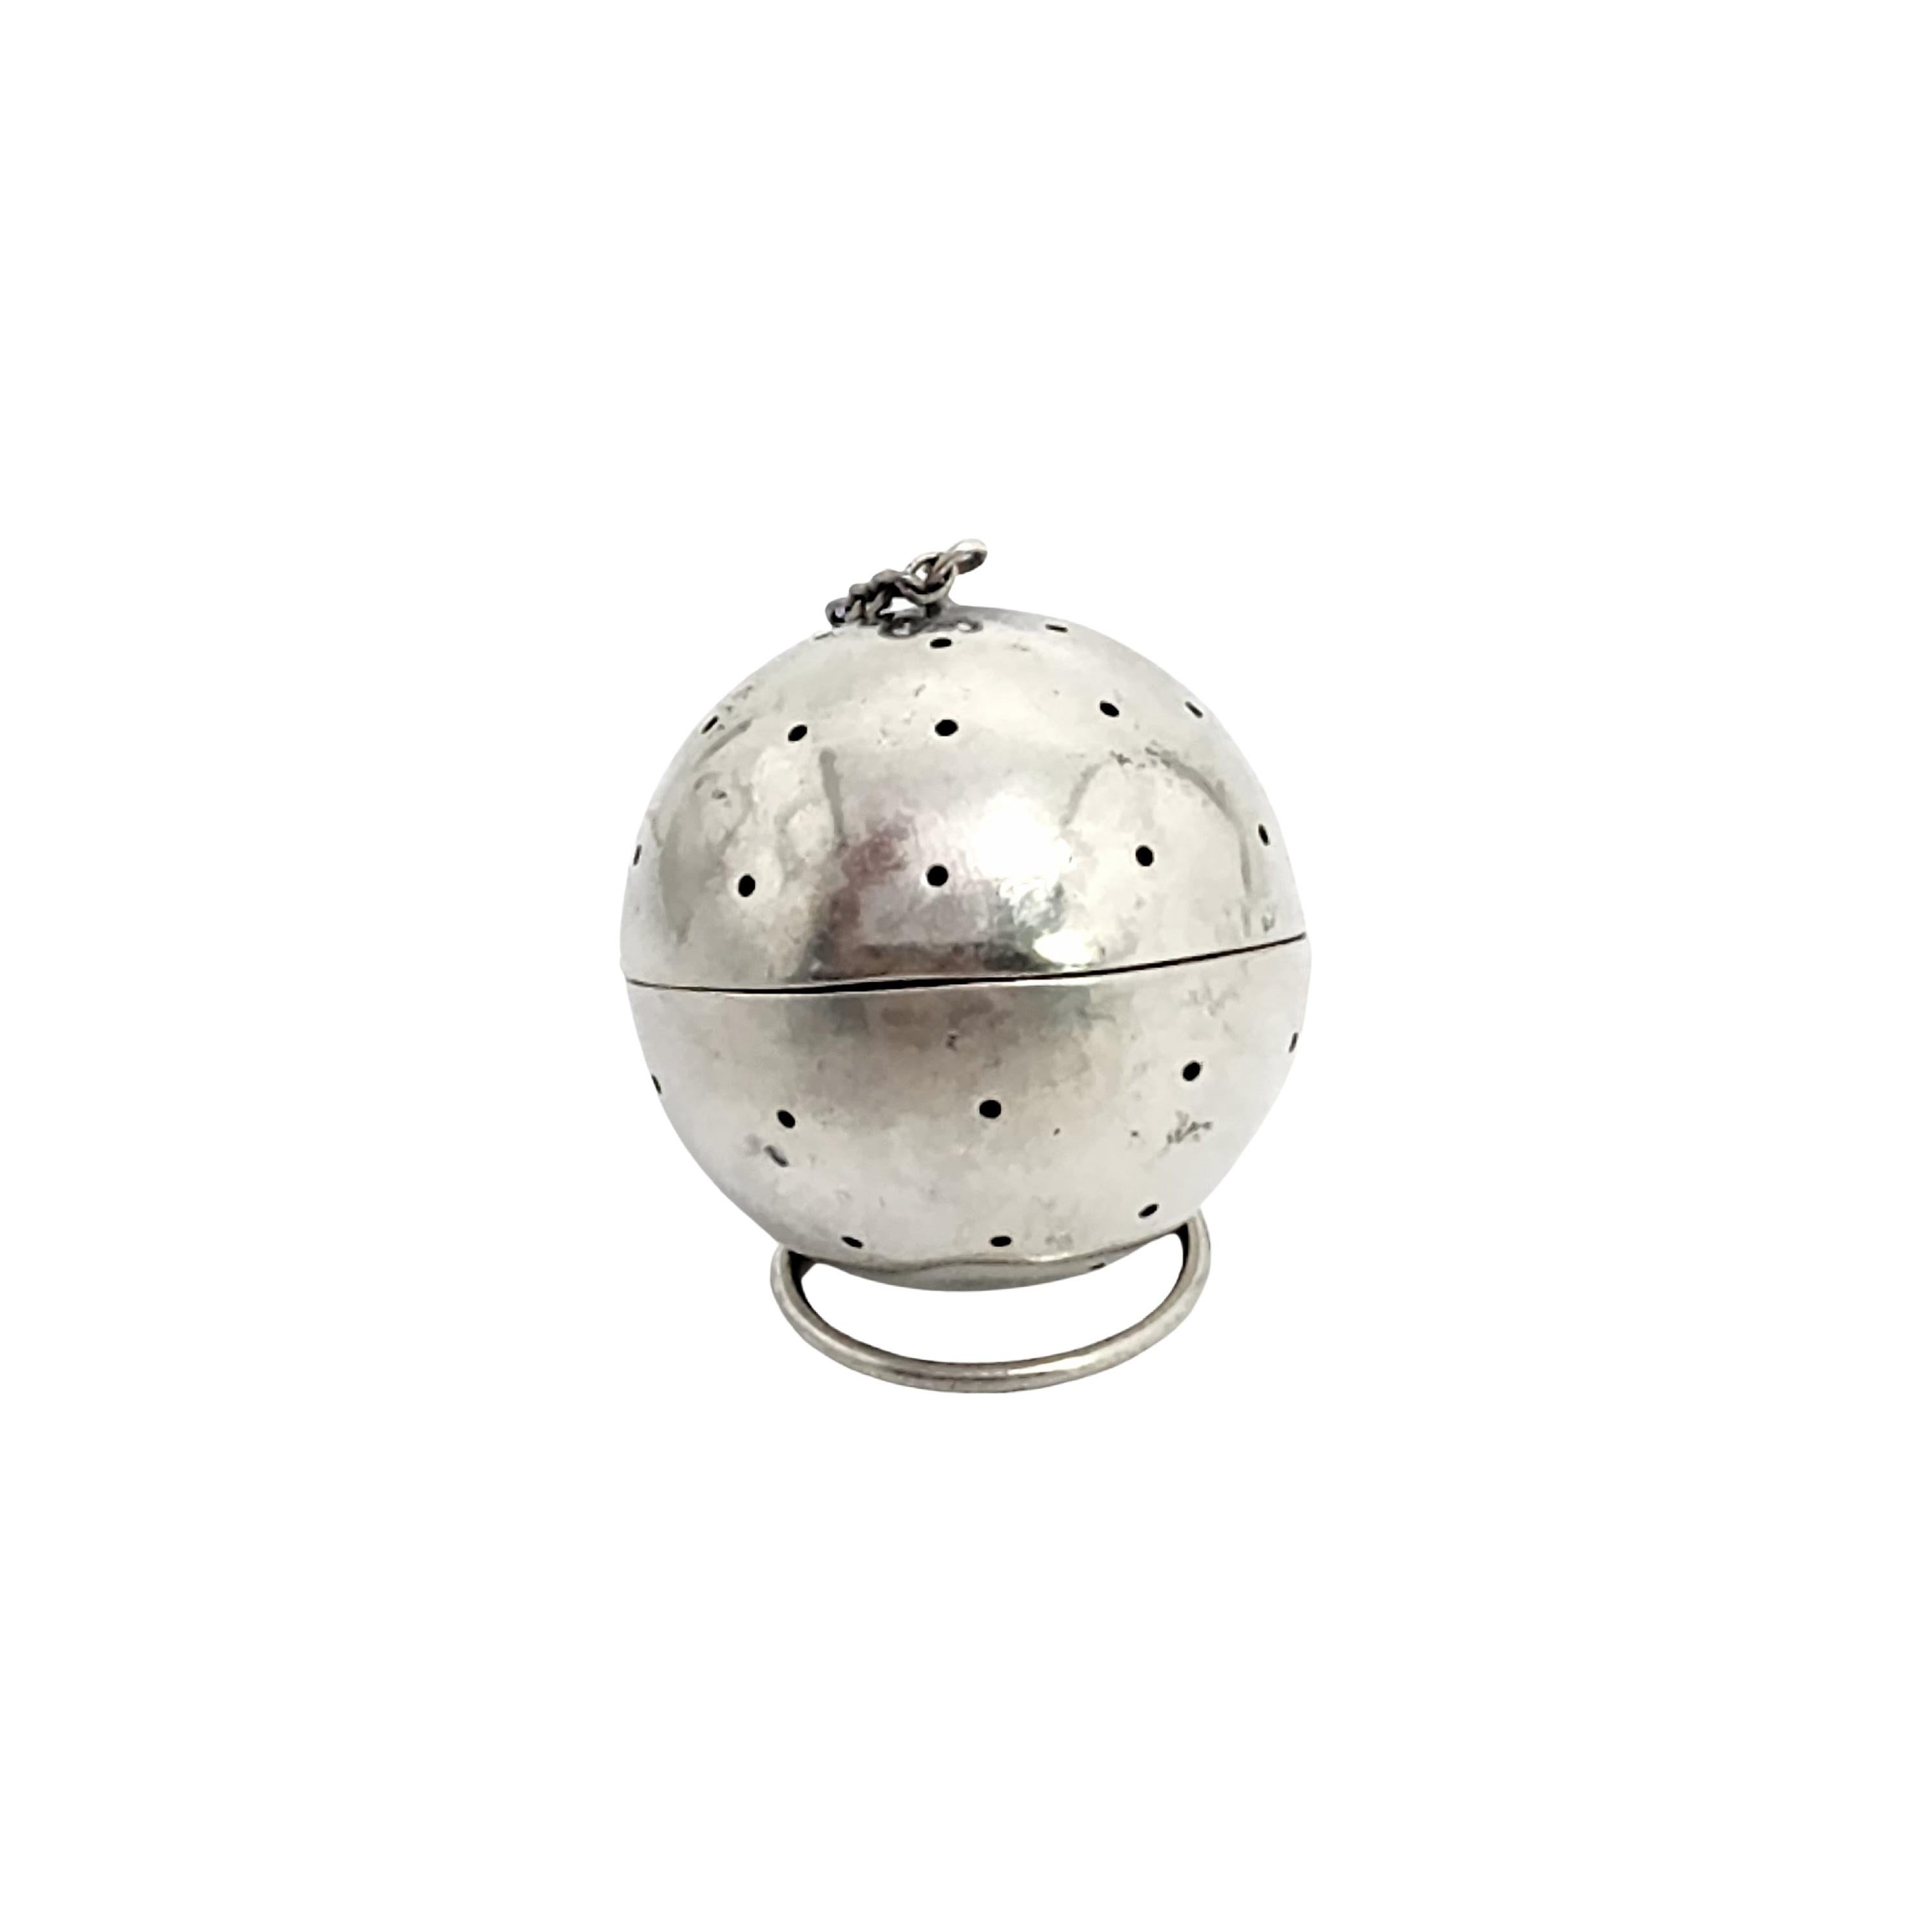 Rogers Lunt & Bowen Sterling Silver Tea Ball Infuser 8